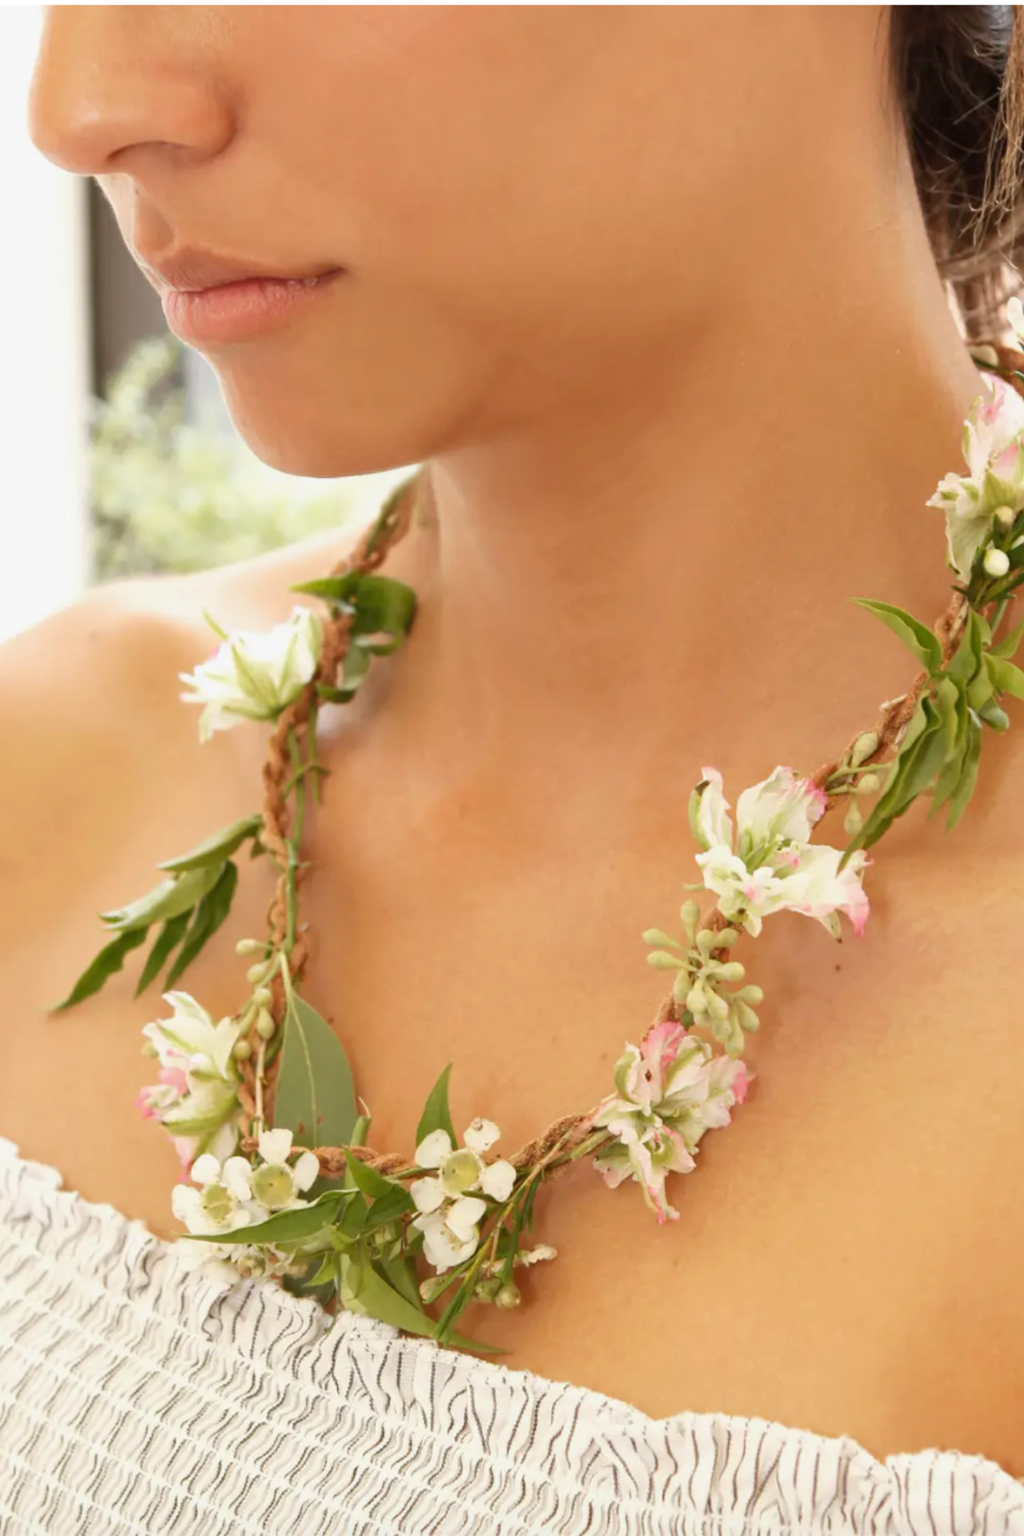 make your own fresh flower necklace | diy kit